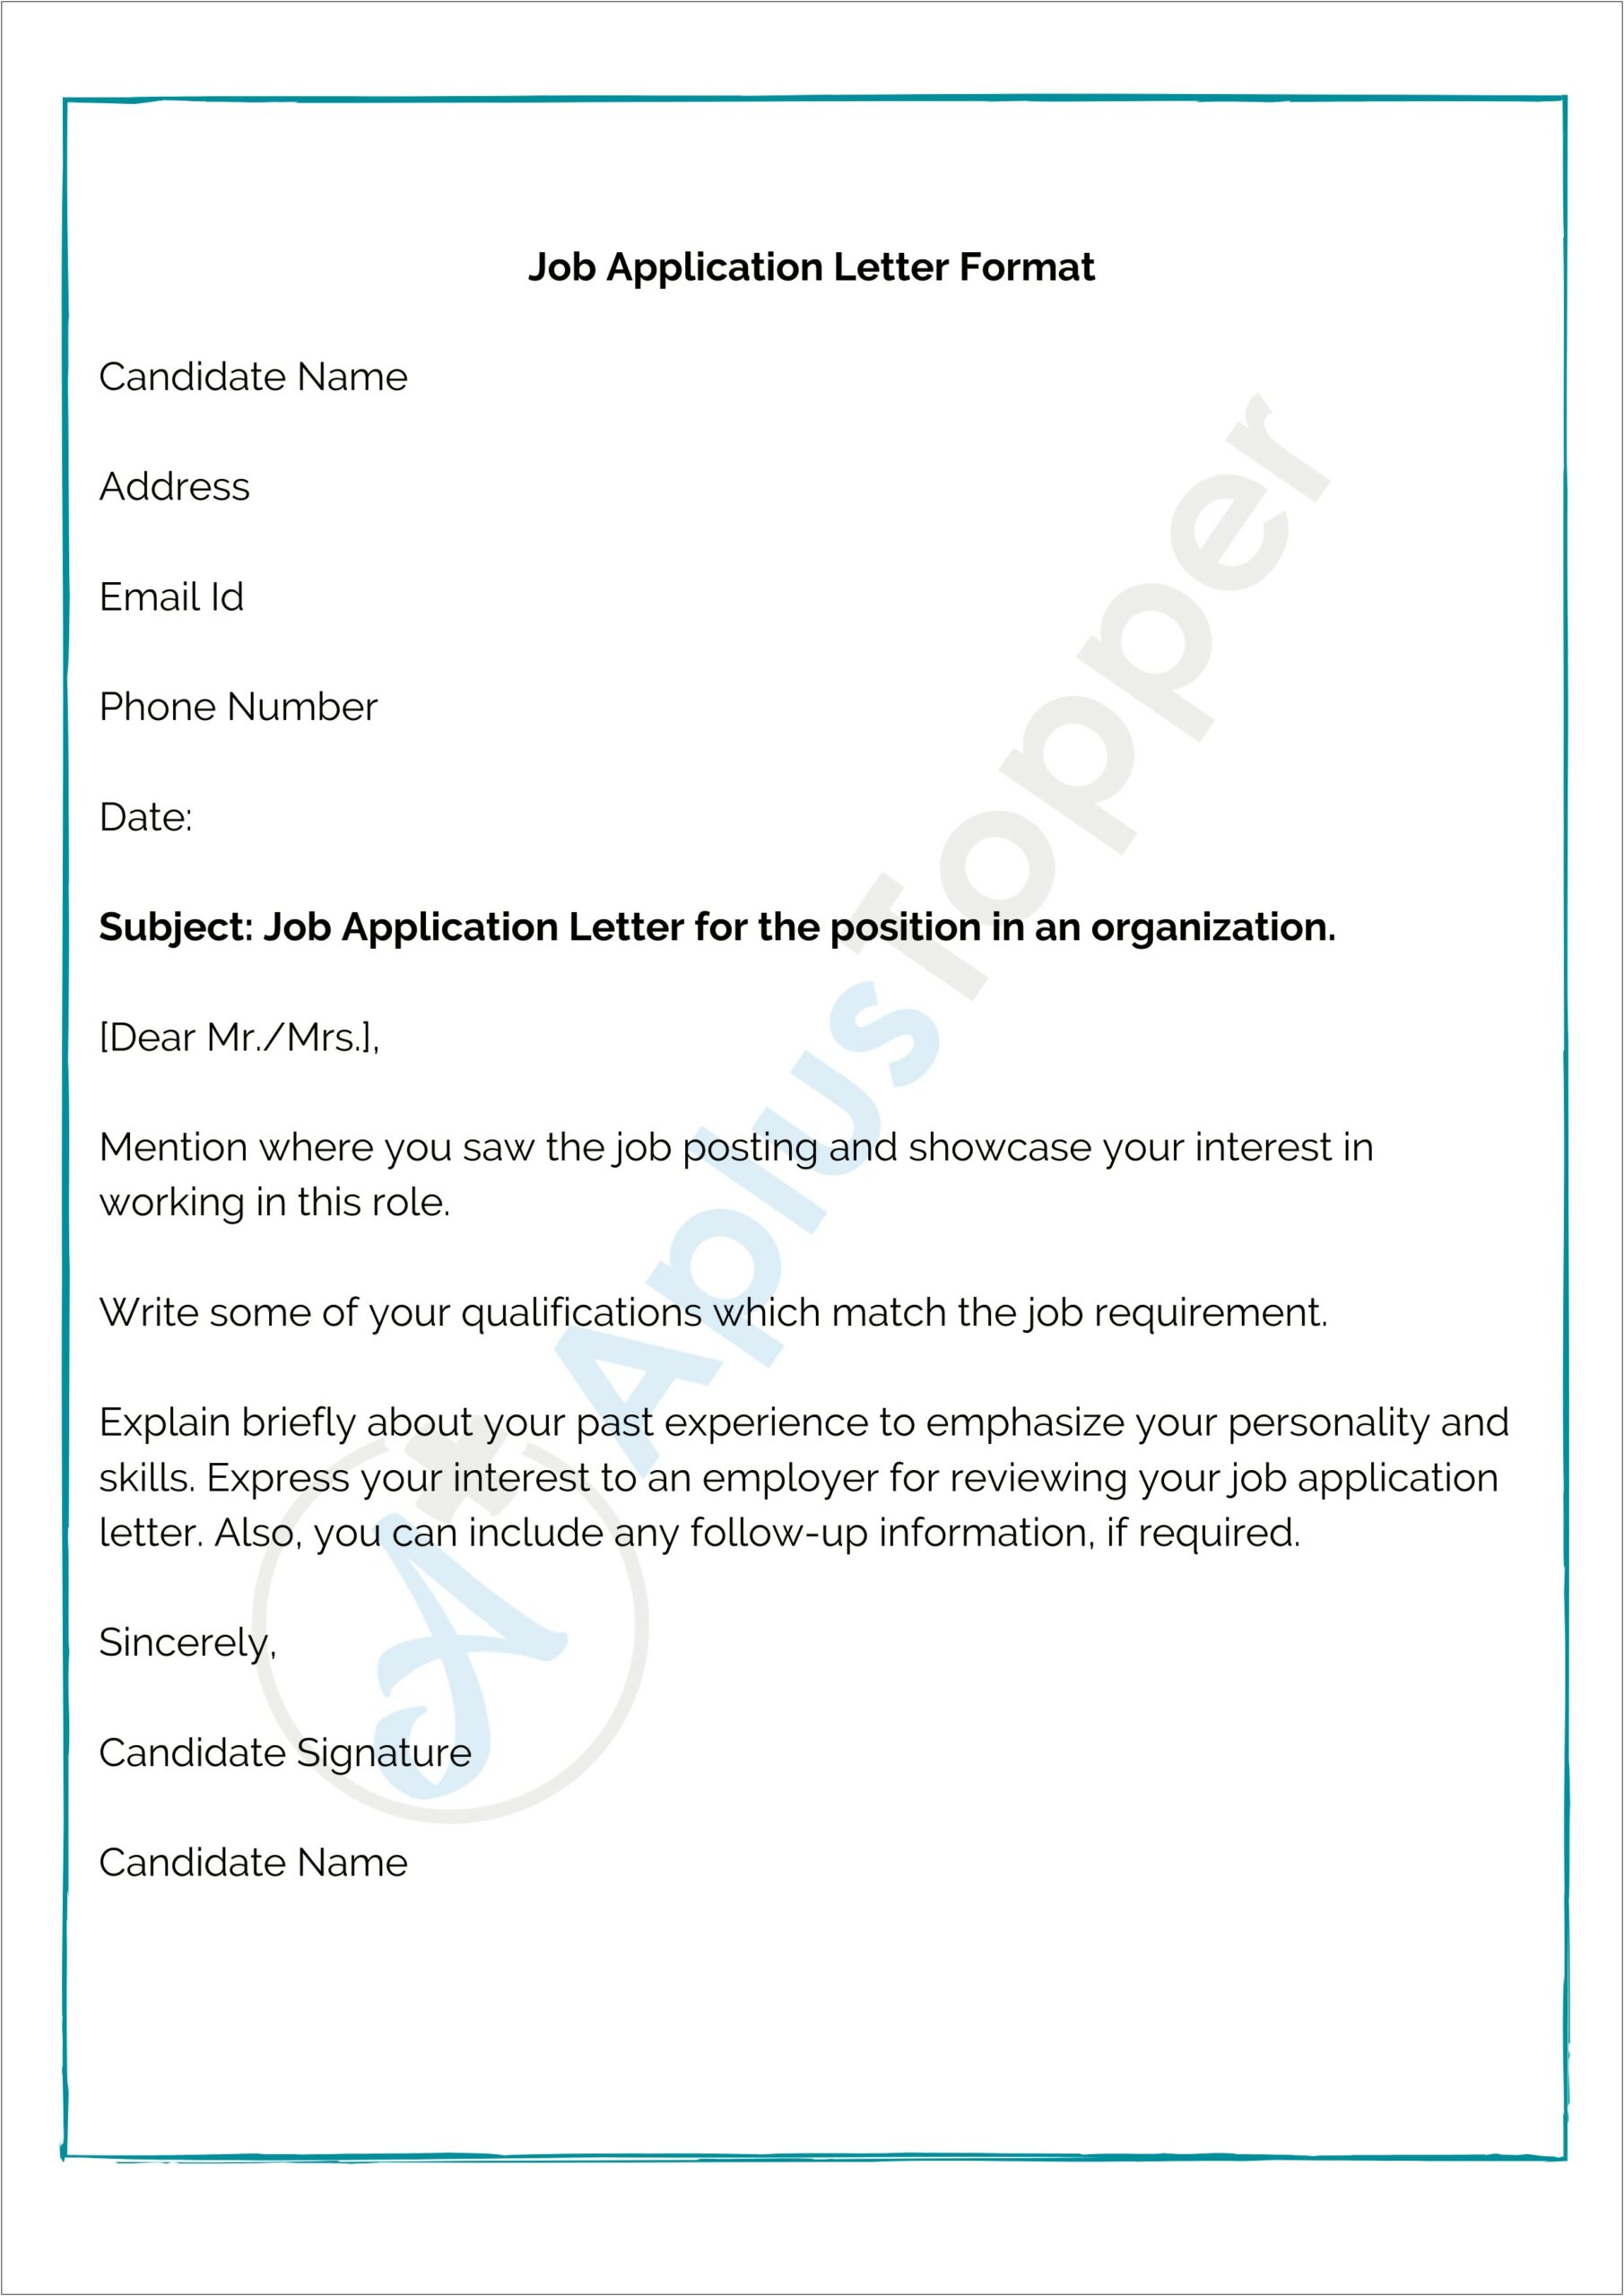 Resume Letter Sample For Any Position